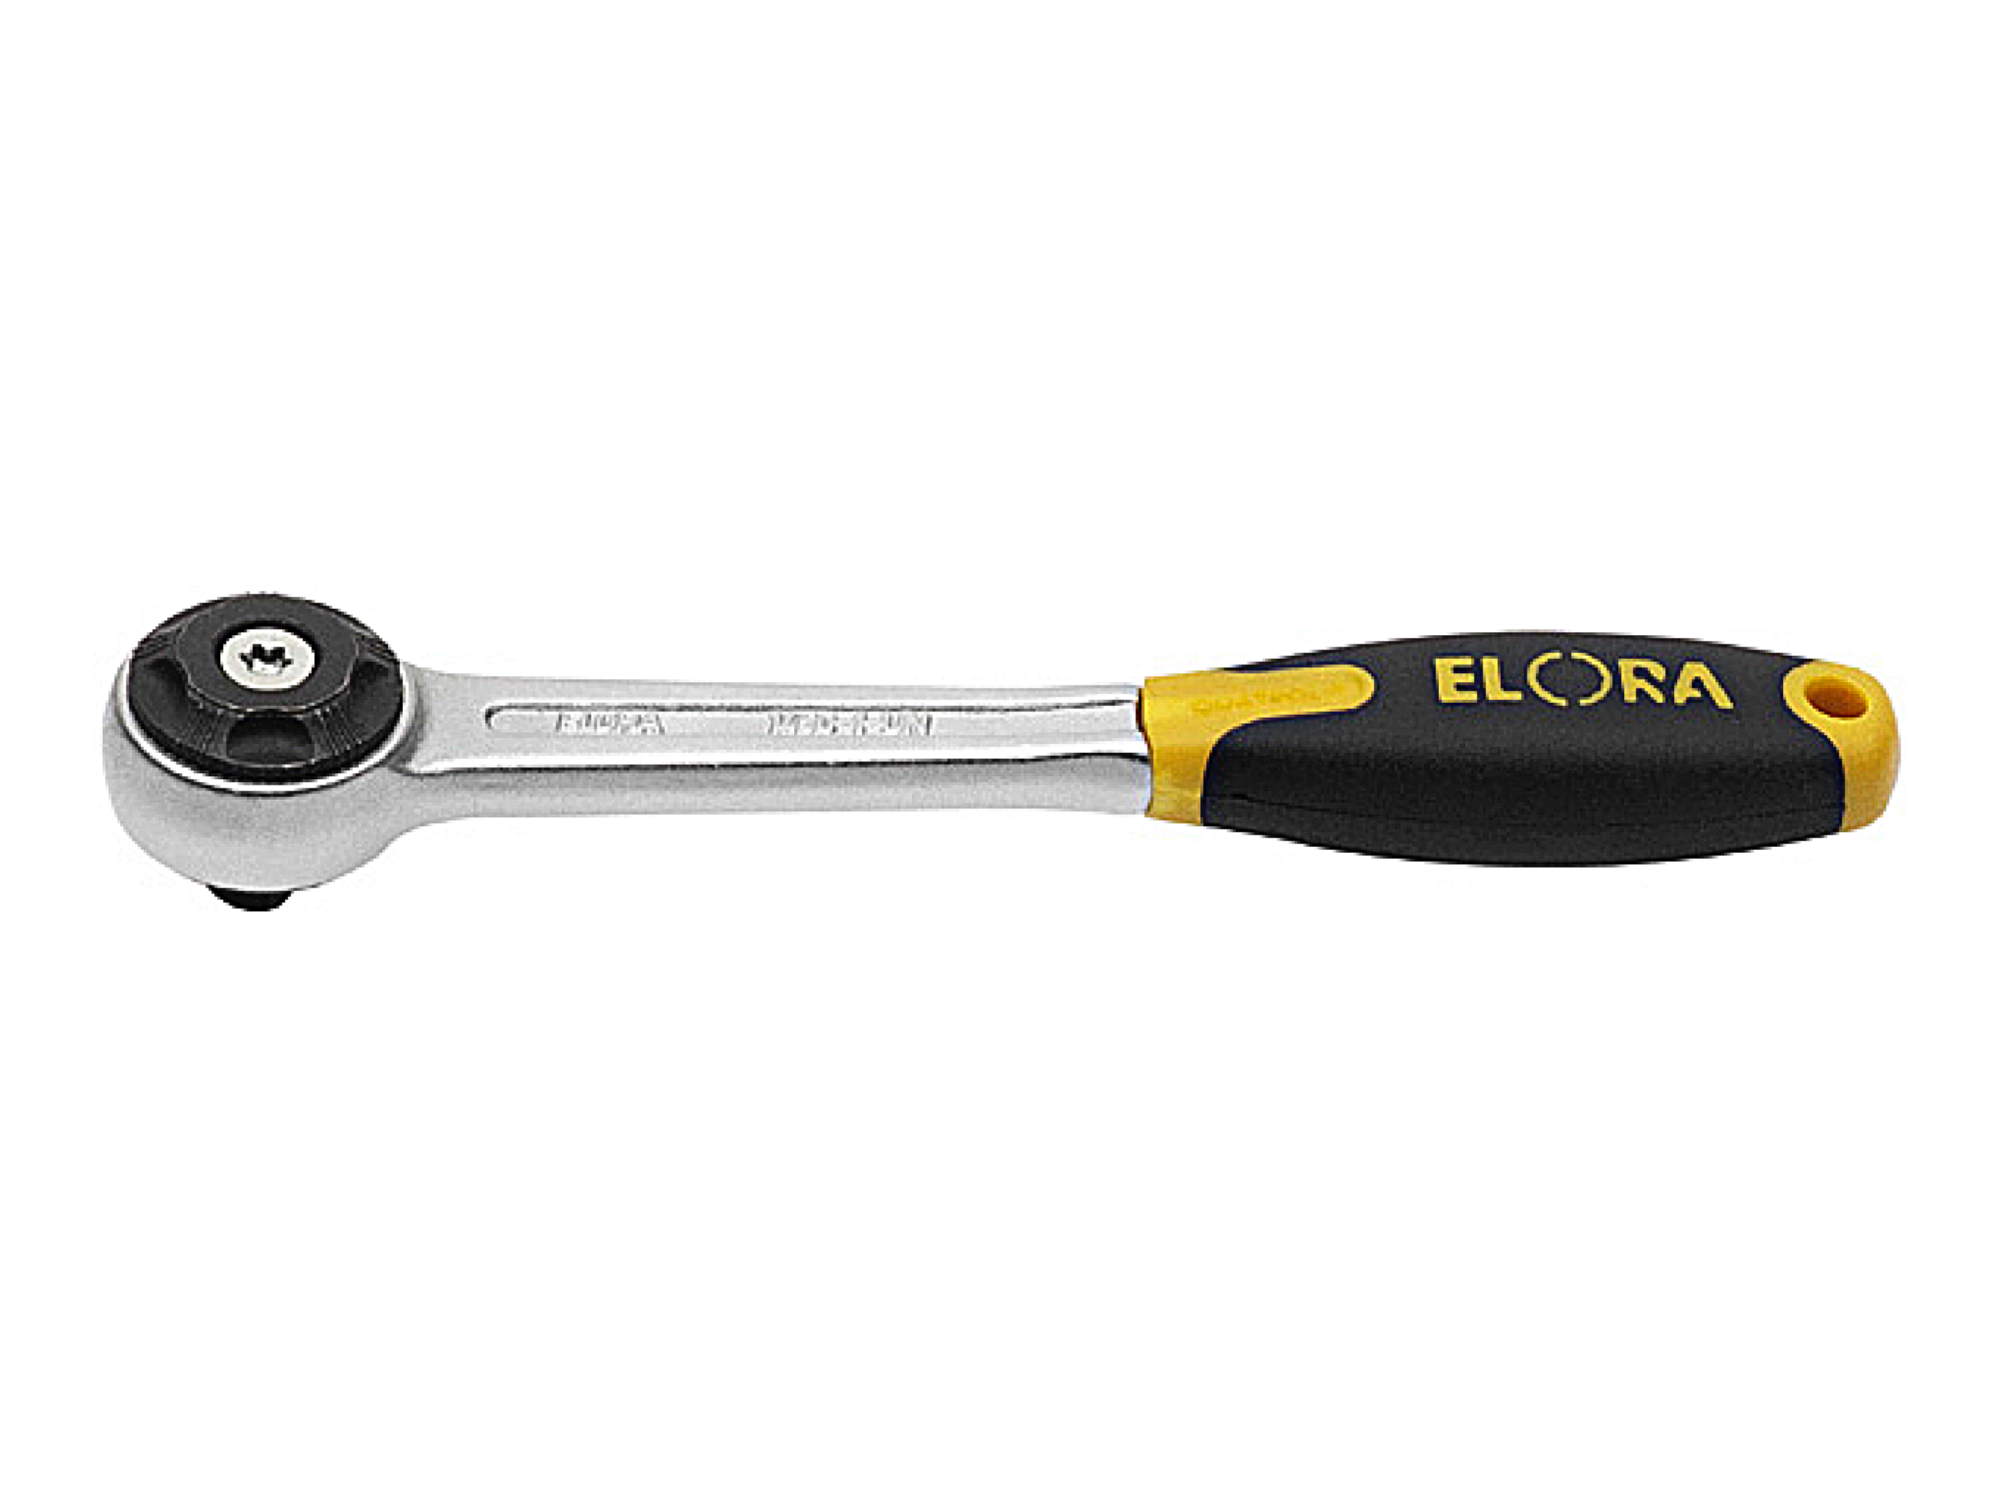 ELORA 1450-1D 1/4" Reversible Ratchet, Fine Tooth (ELORA Tools) - Premium 1/4" Reversible Ratchet from ELORA - Shop now at Yew Aik.